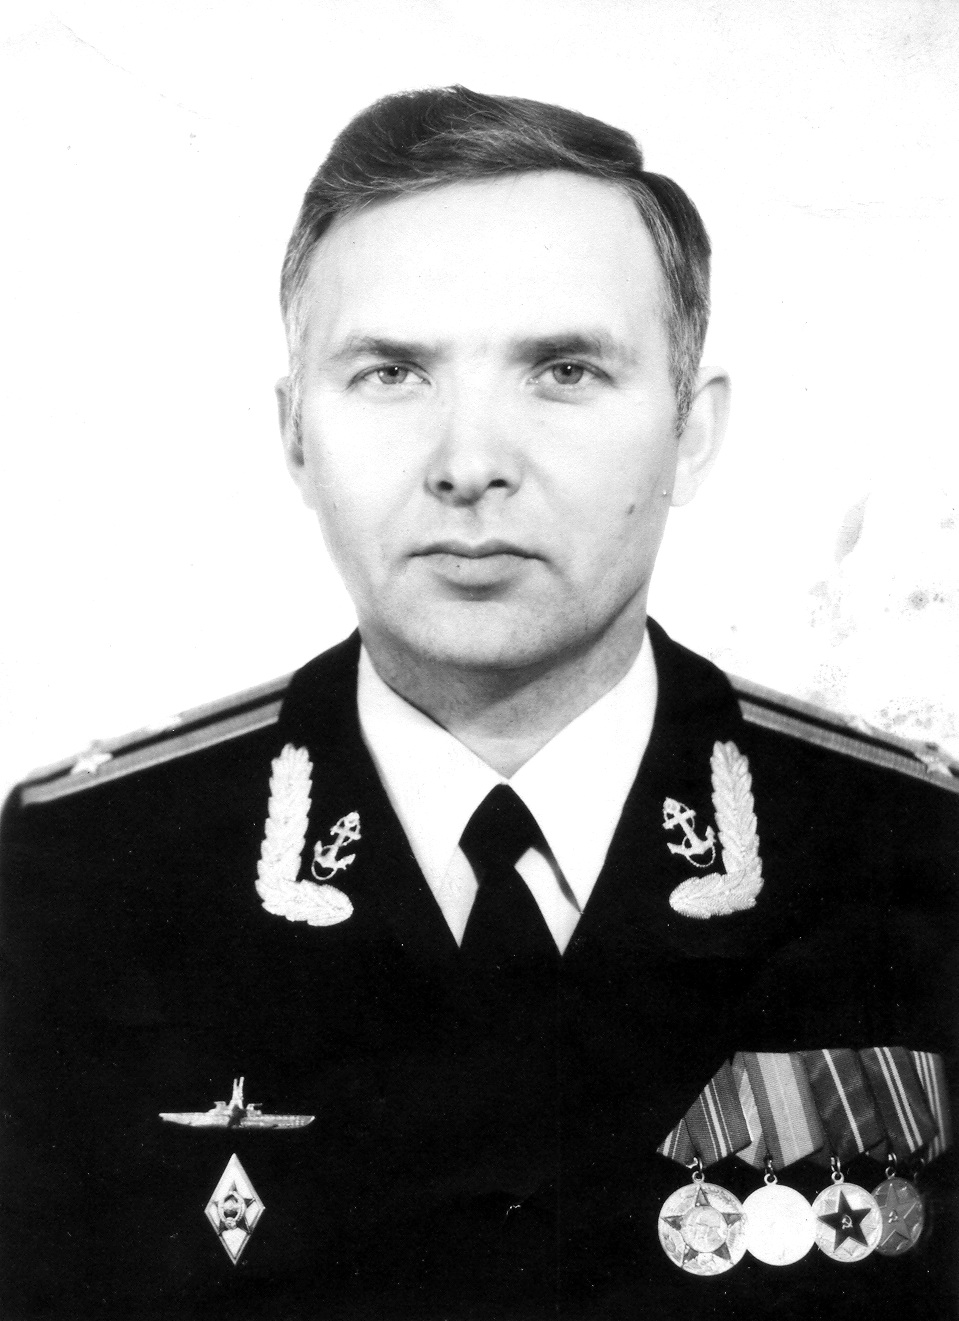 Булгаков Капитан 1 ранга